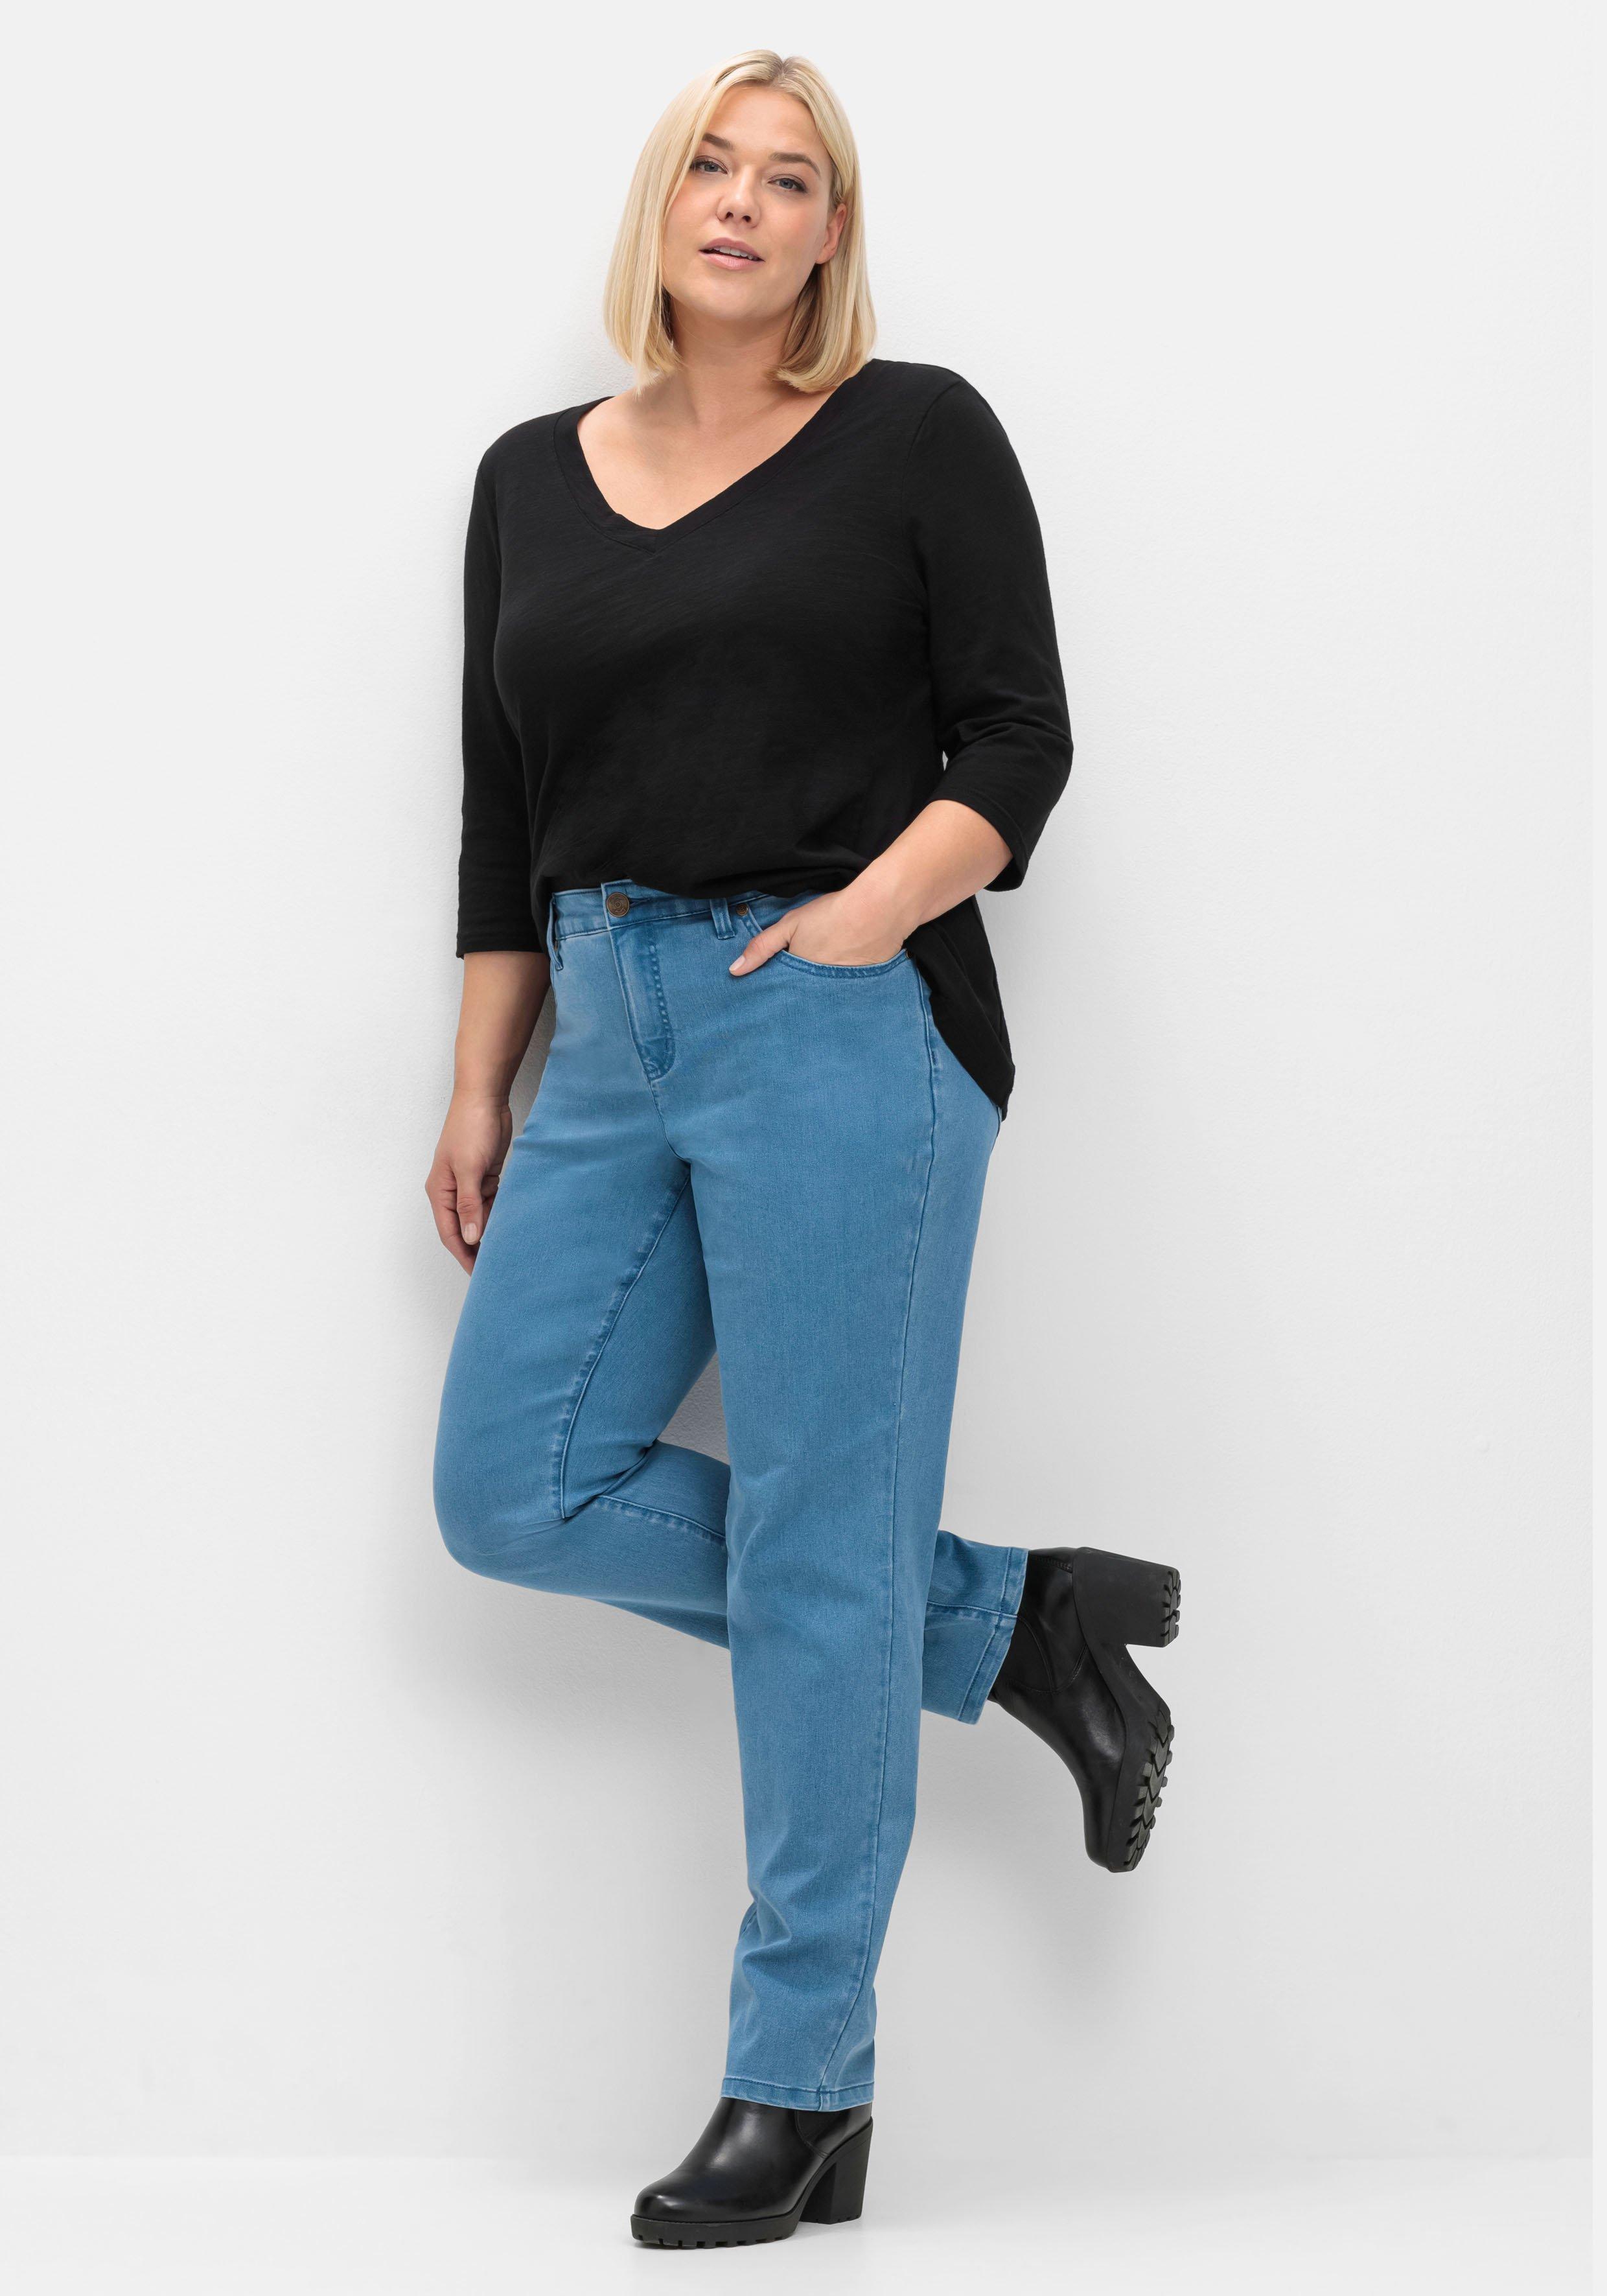 Schmale Stretch-Jeans black | 5-Pocket-Stil sheego blue - im Denim